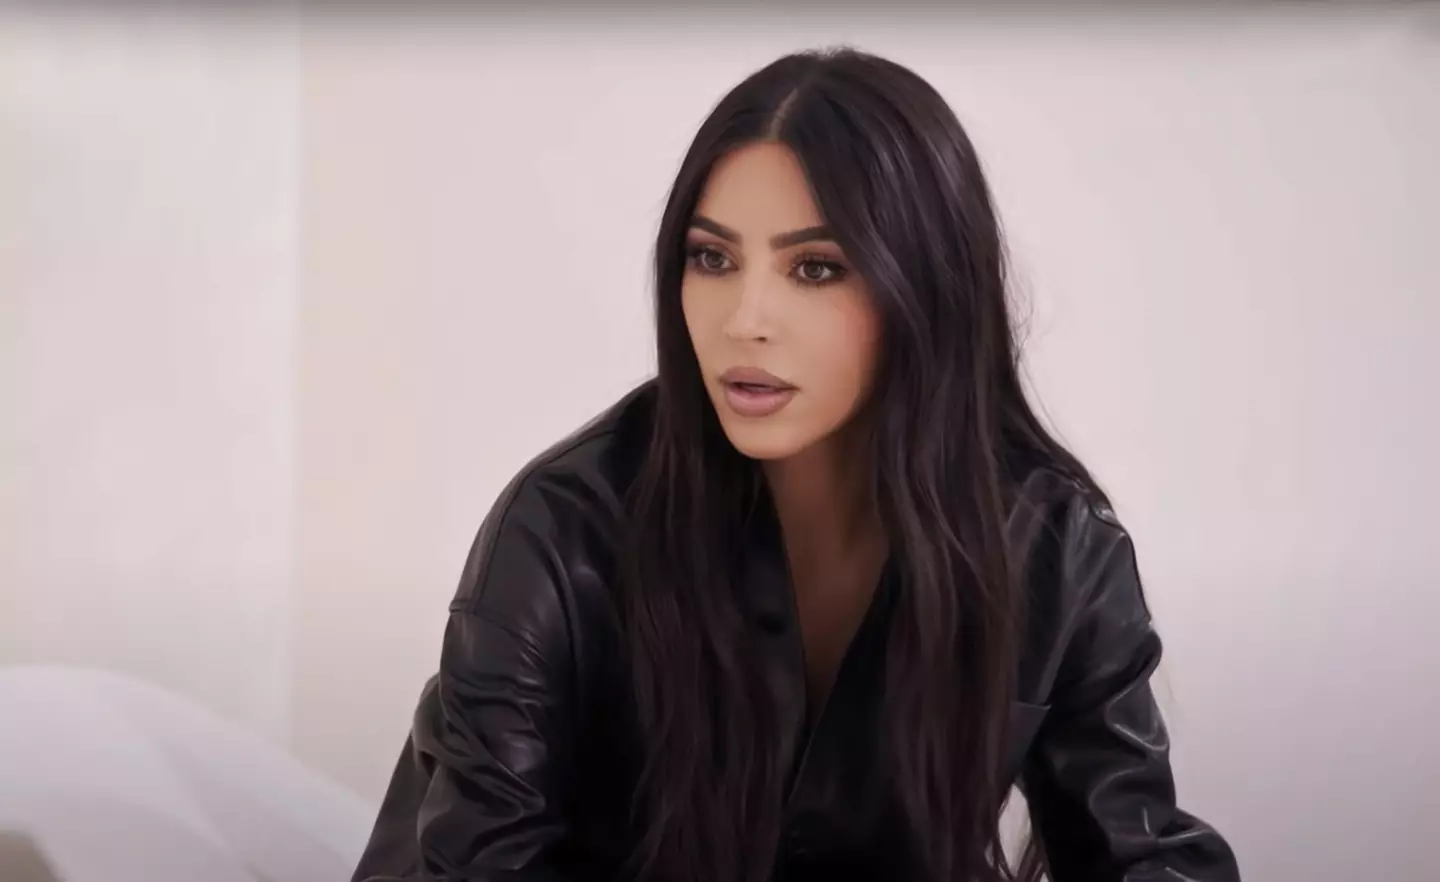 Kim Kardashian shocked viewers on this week's episode of the Hulu show.